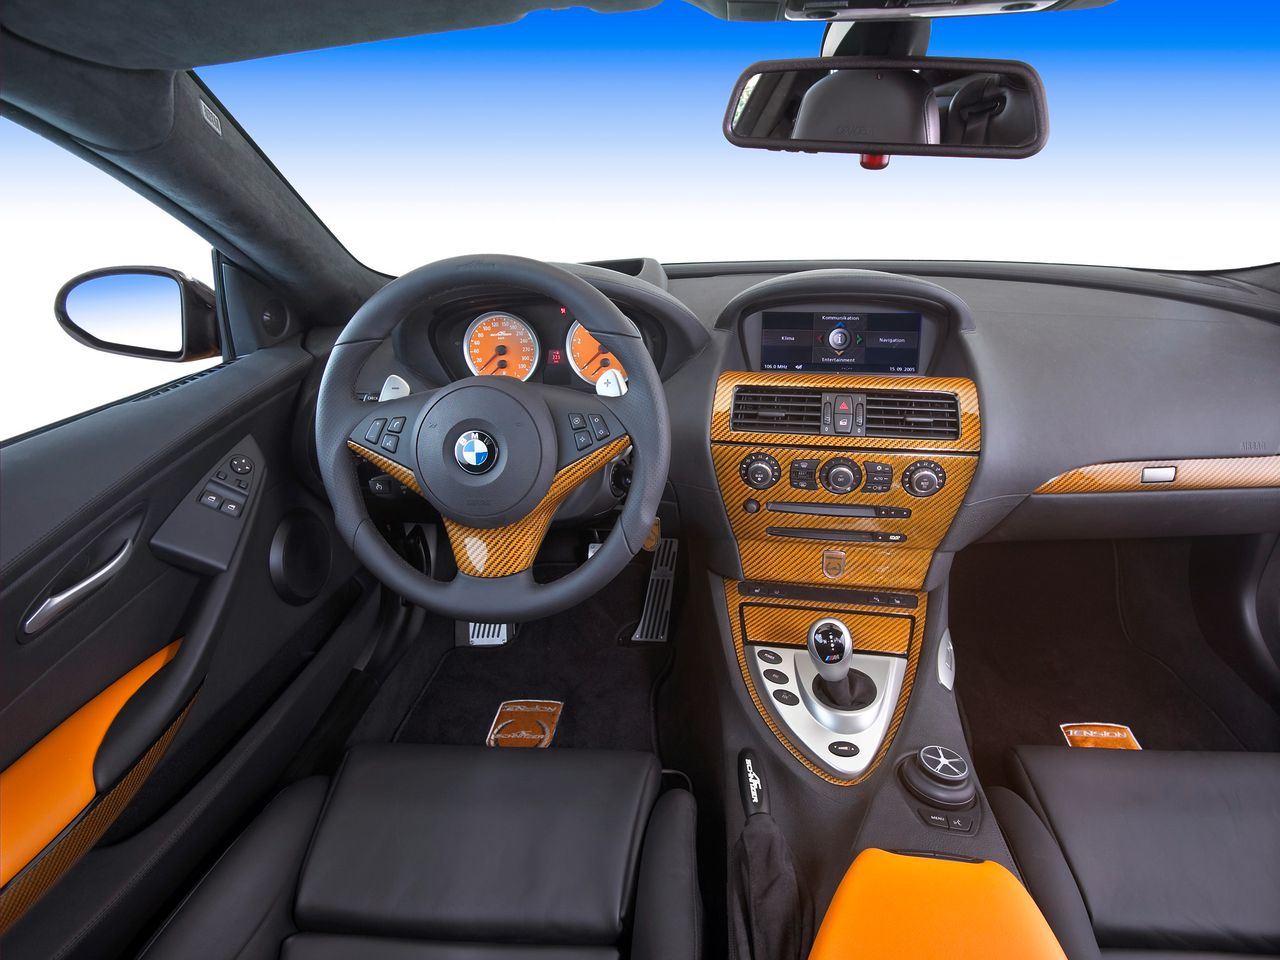 BMW Serii 6 AC Schnitzer Tension Concept